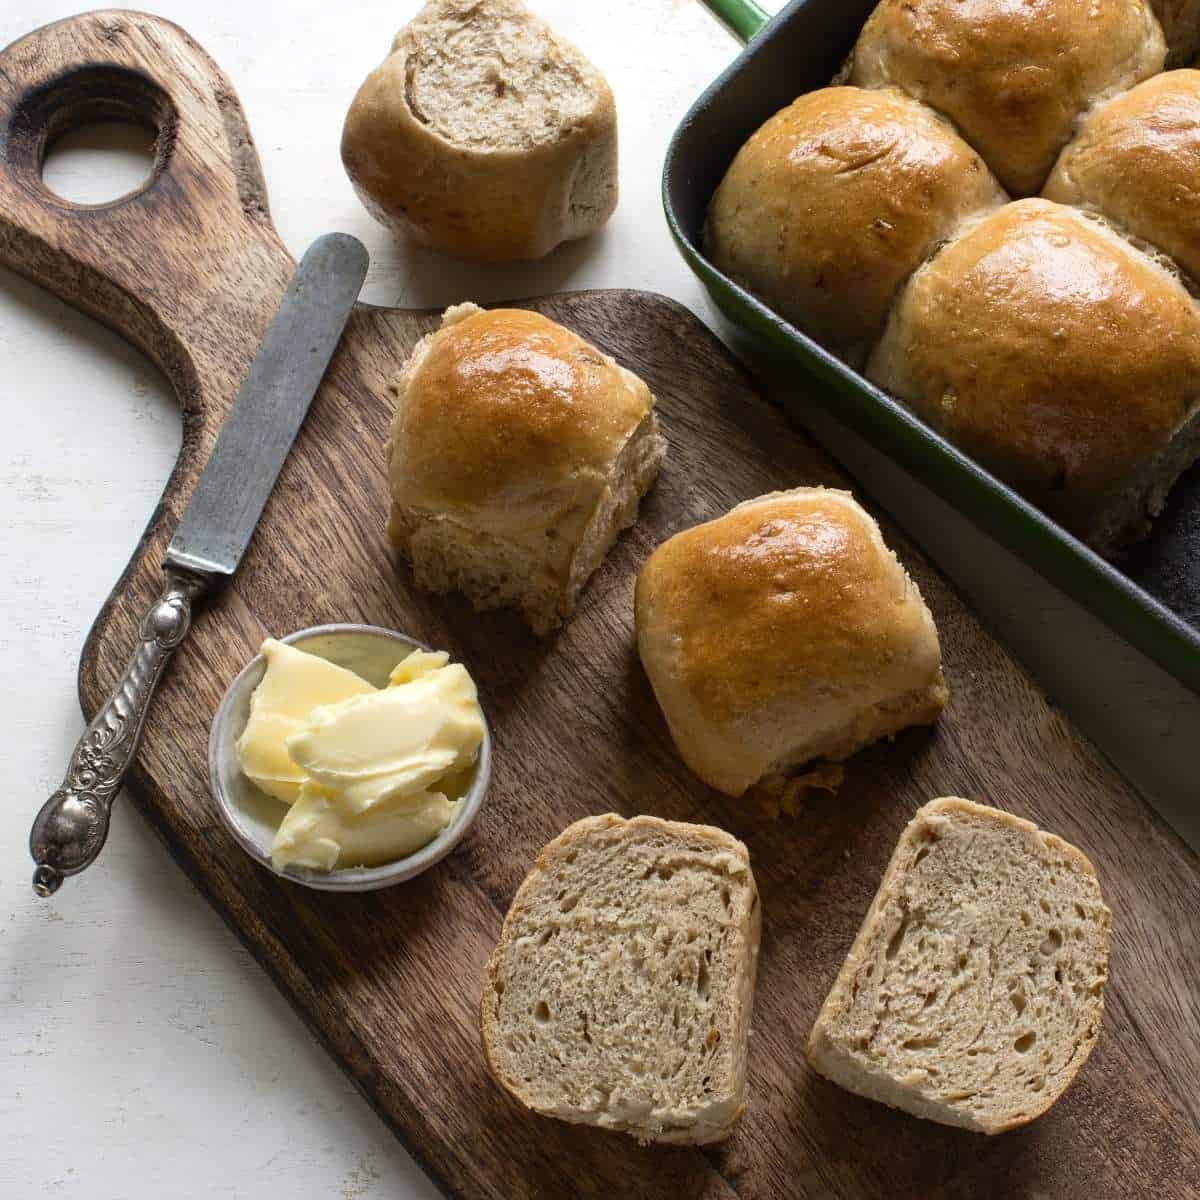 Baked bread rolls on a brown wooden board.